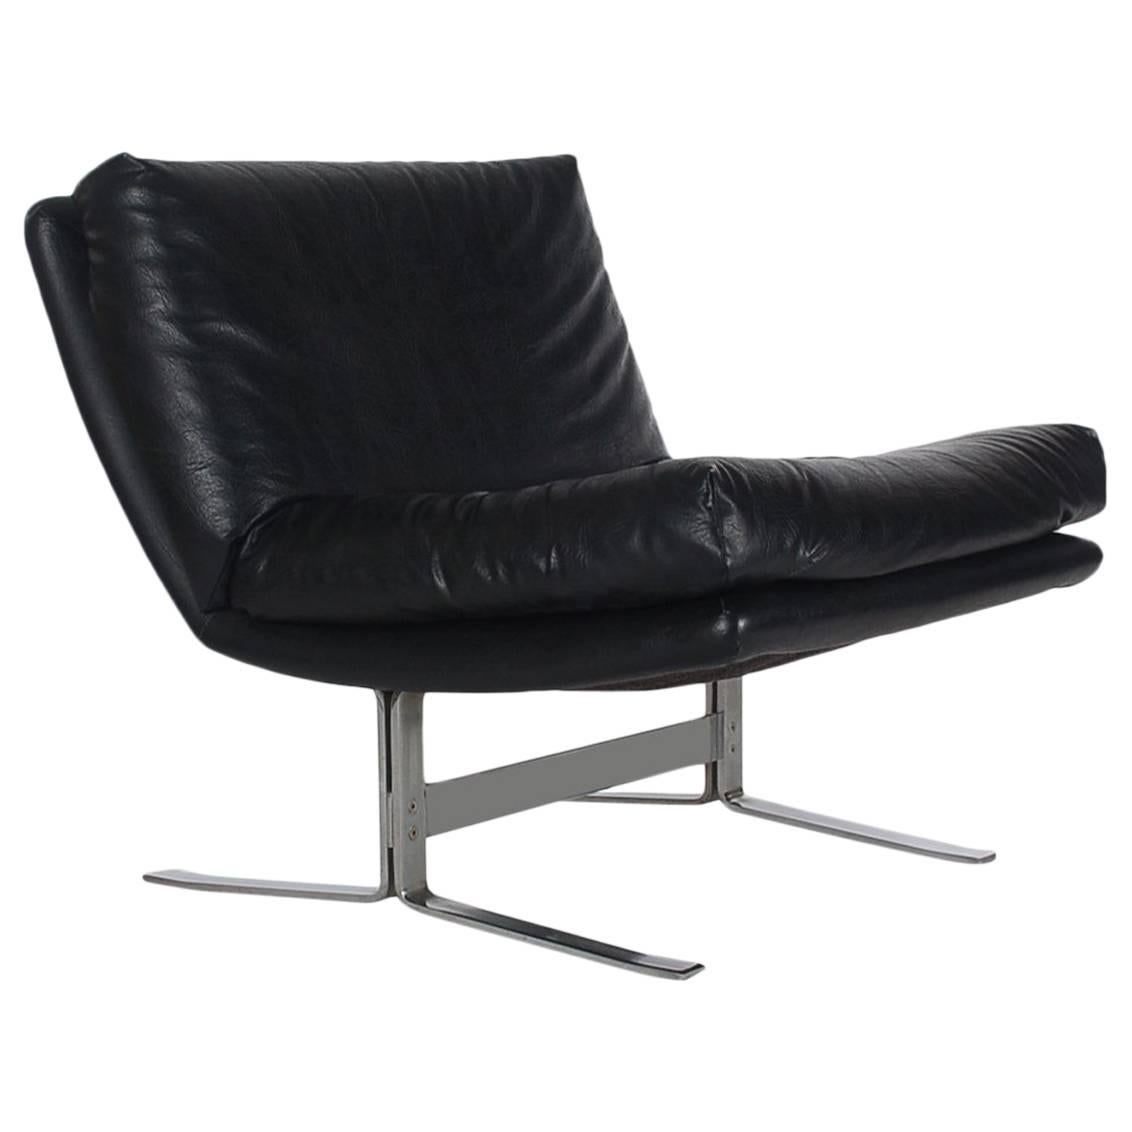 Mid-Century Modern Black Lounge Chair in the Manner of Pierre Paulin / Artifort